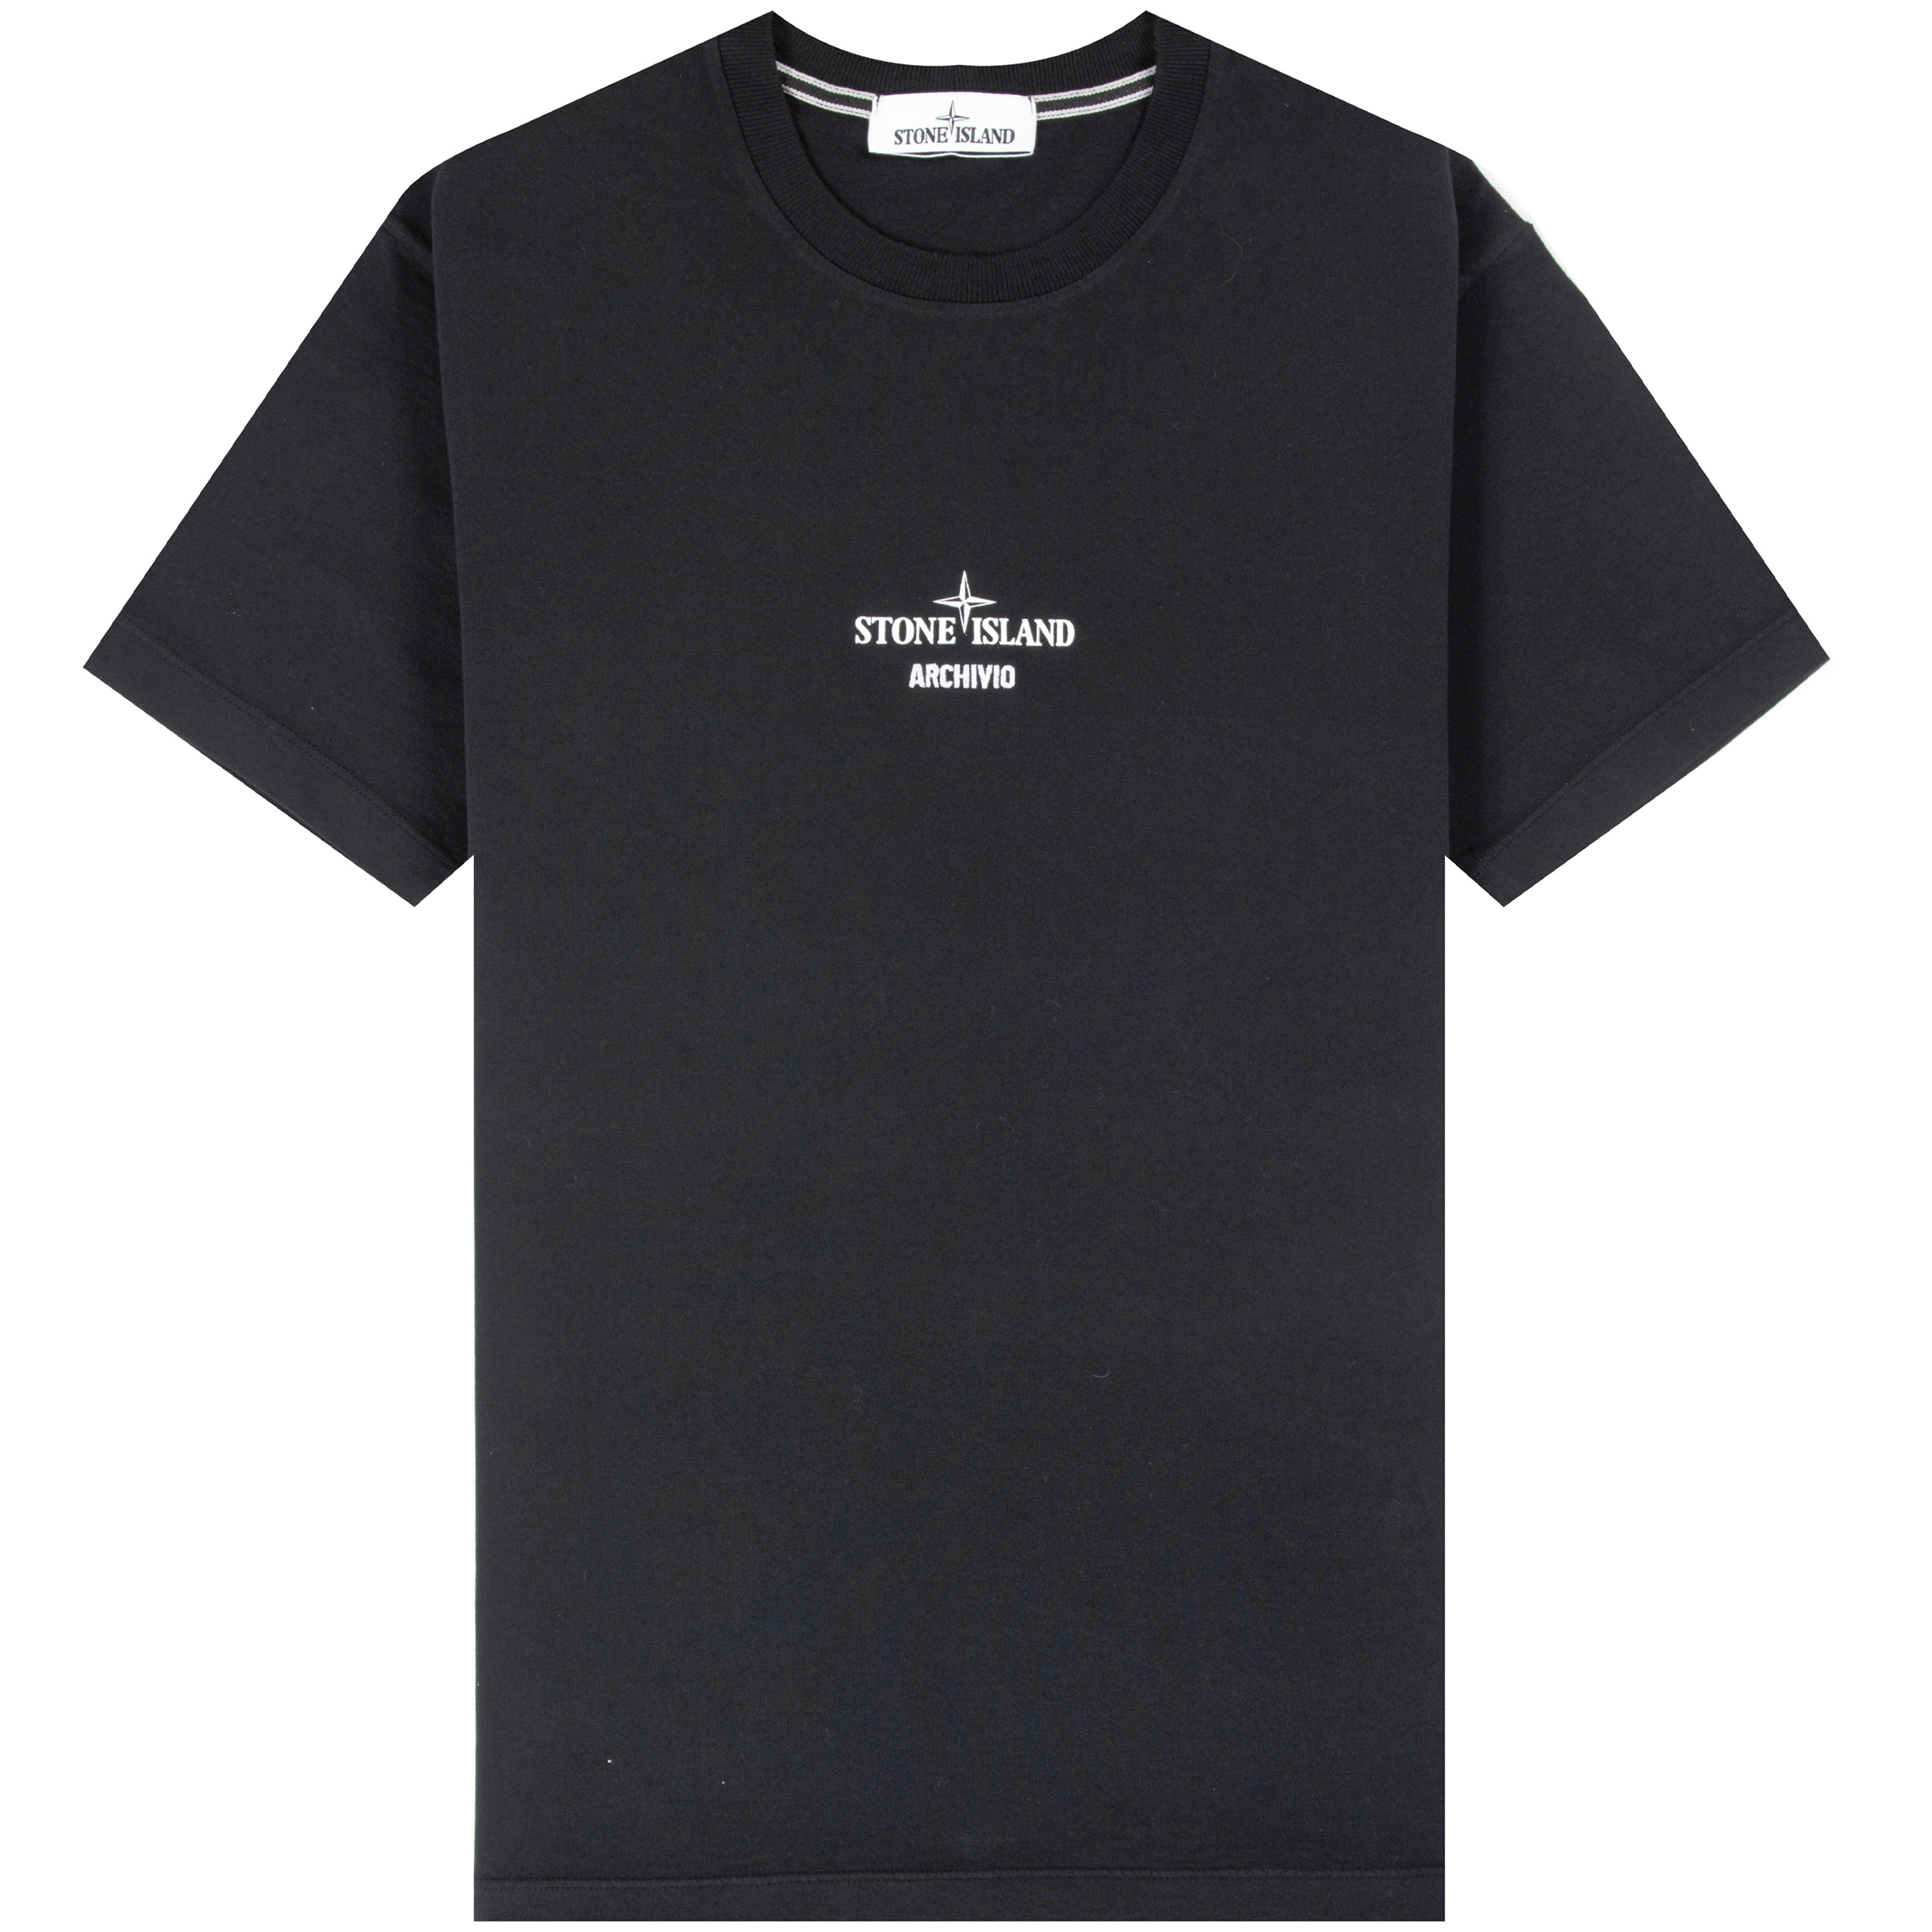 Stone Island 'Archivio' Print T-Shirt Black